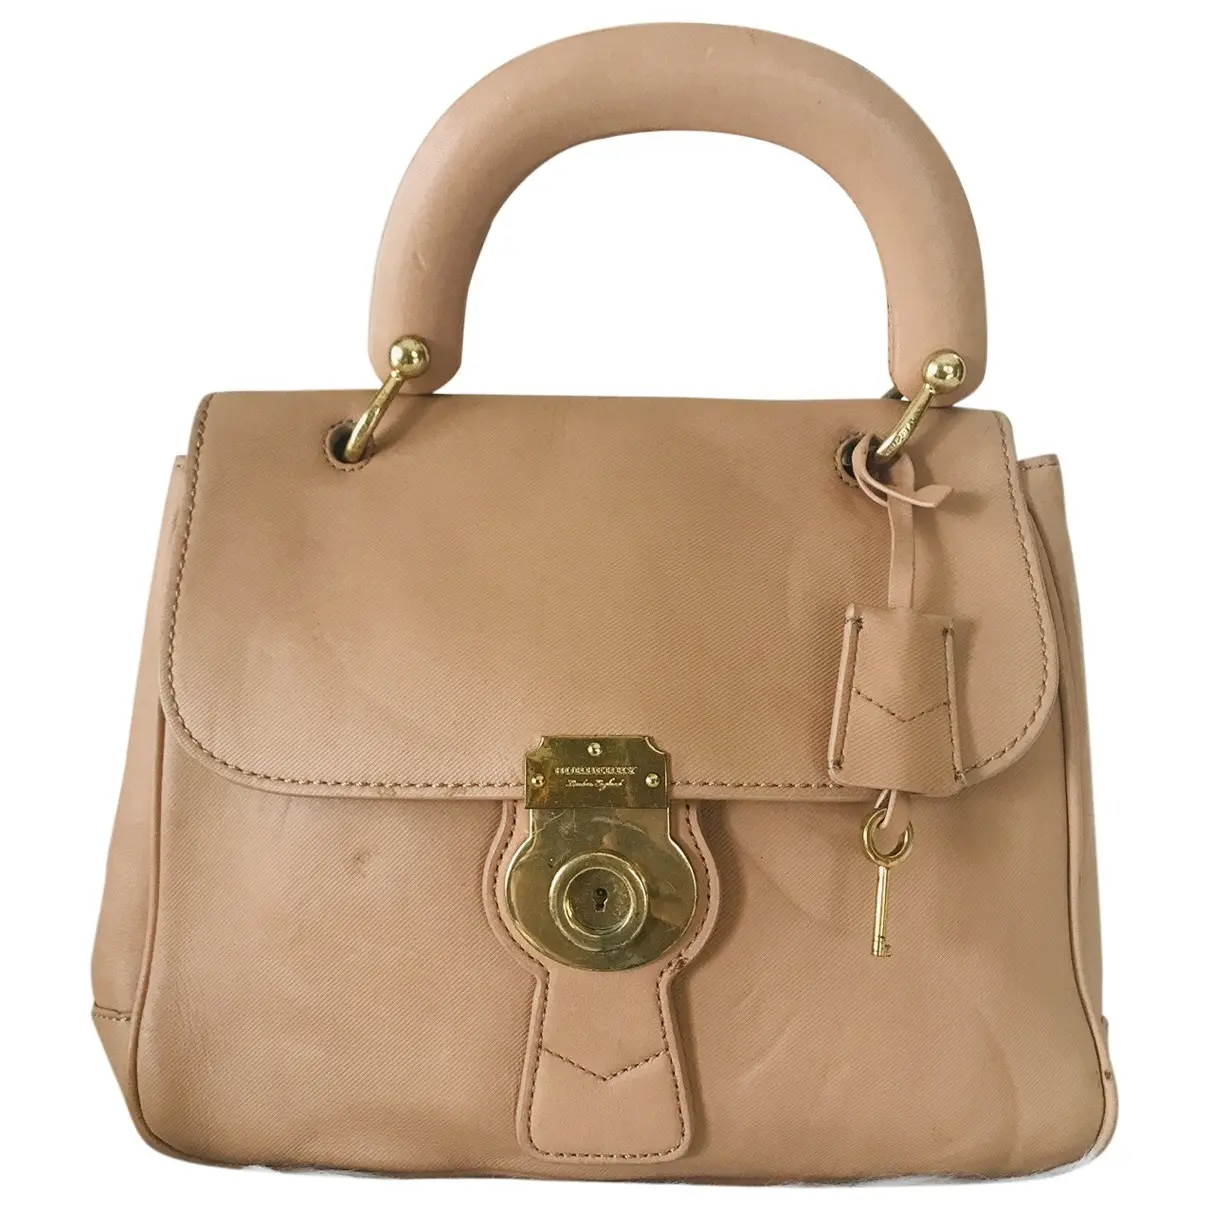 DK 88 leather handbag